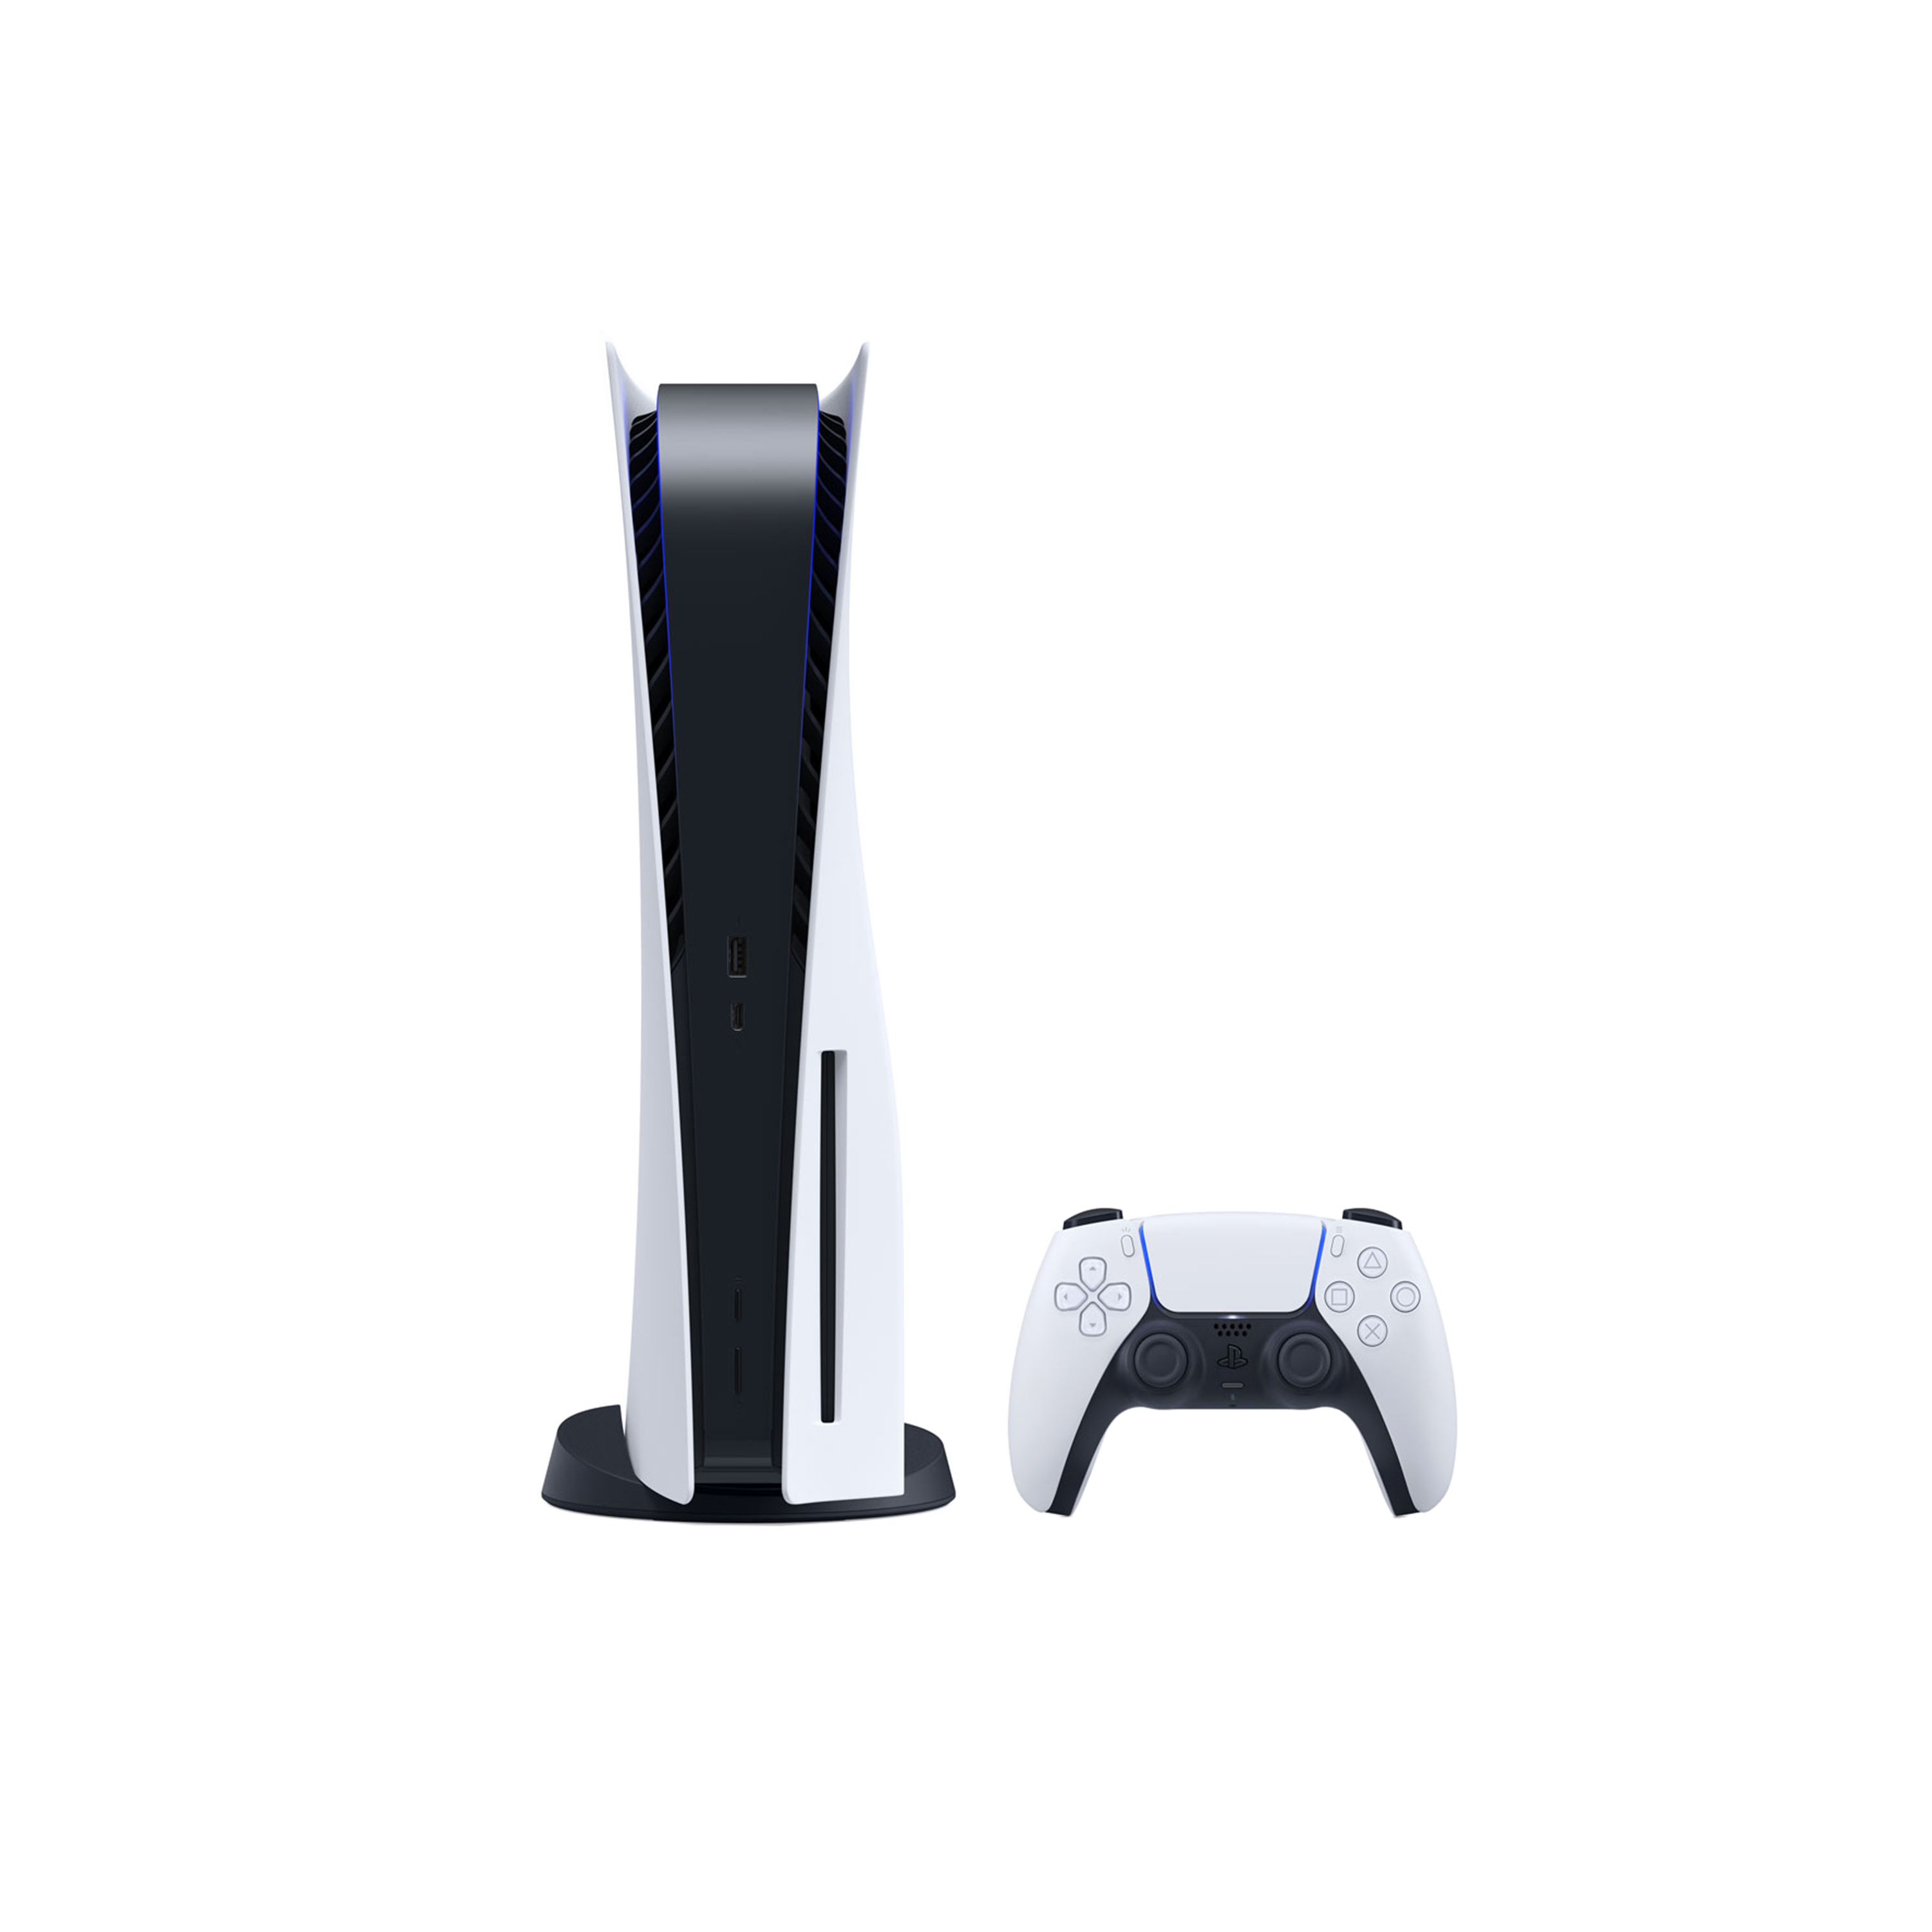 PlayStation®5 主機- PS5™ 主機光碟版- Sony 台灣官方購物網站- Sony Store